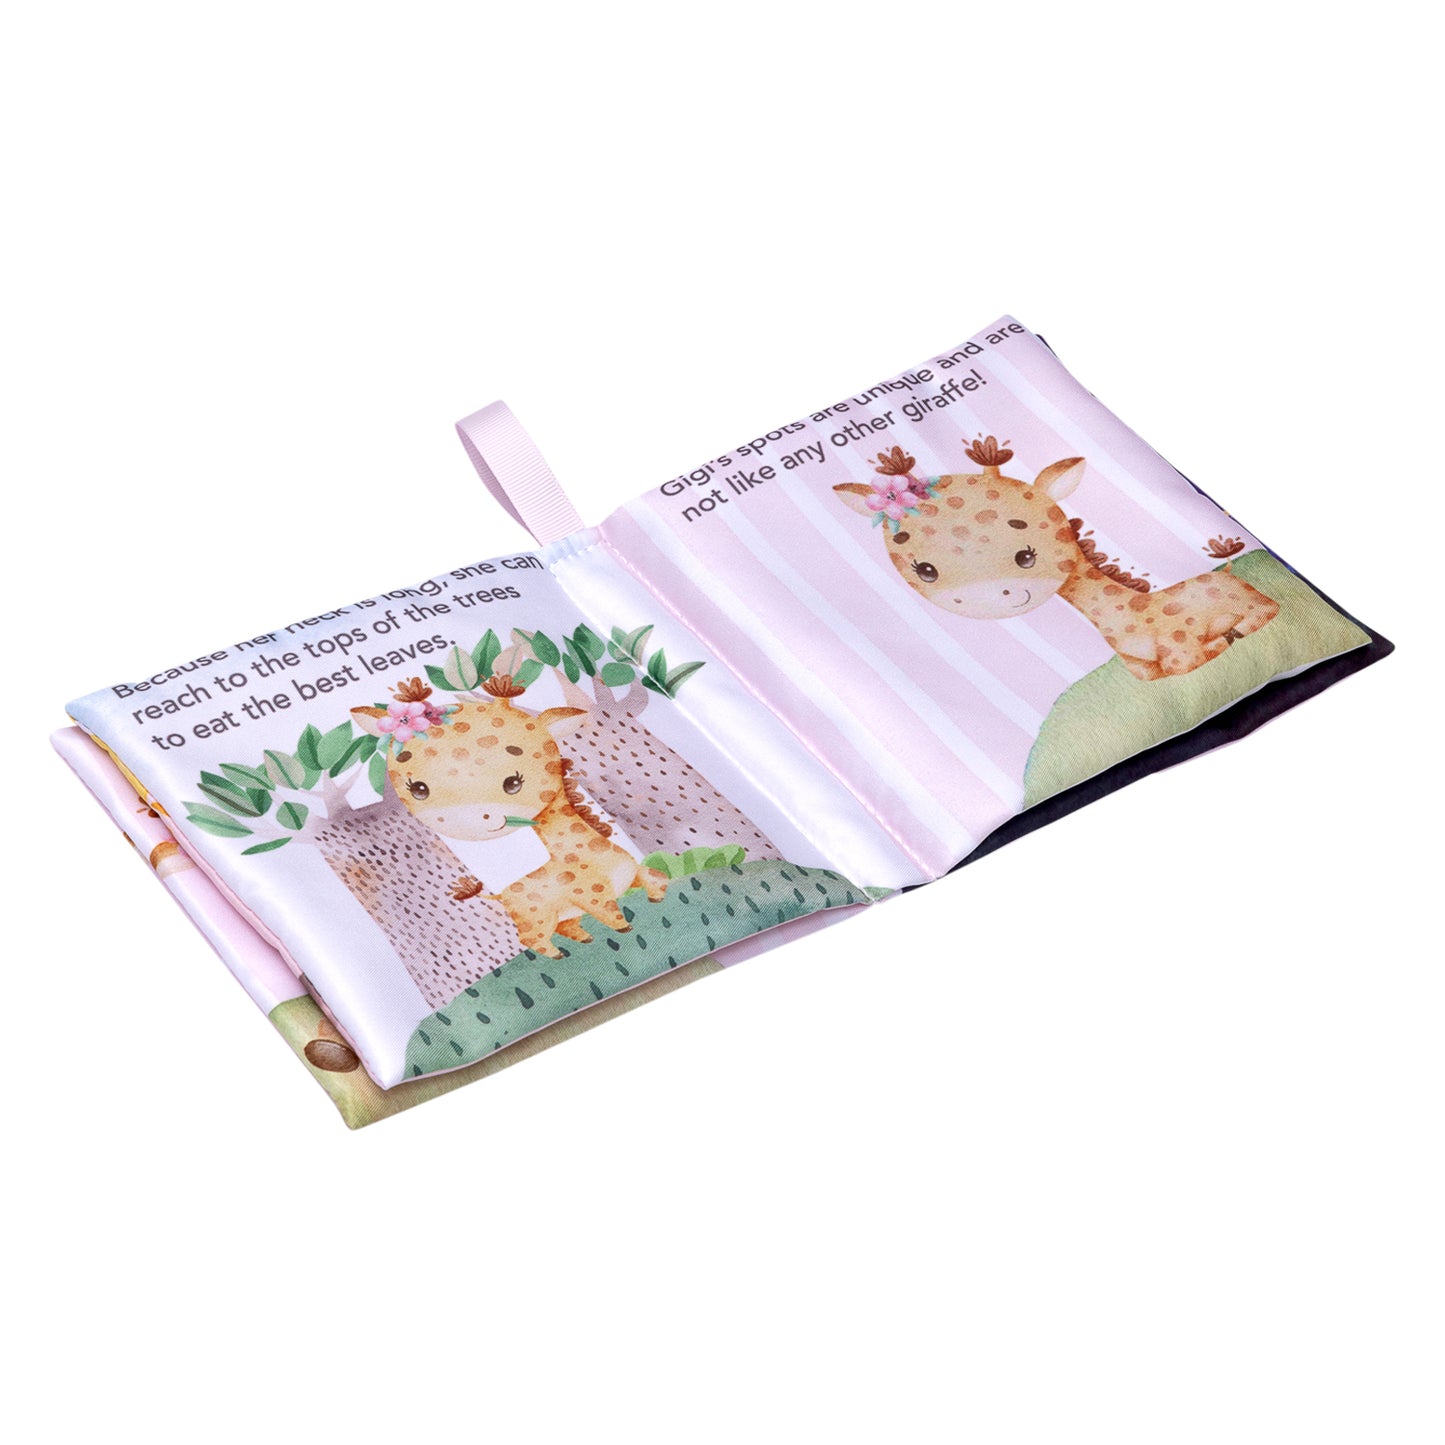 Splosh - Baby Cloth Book